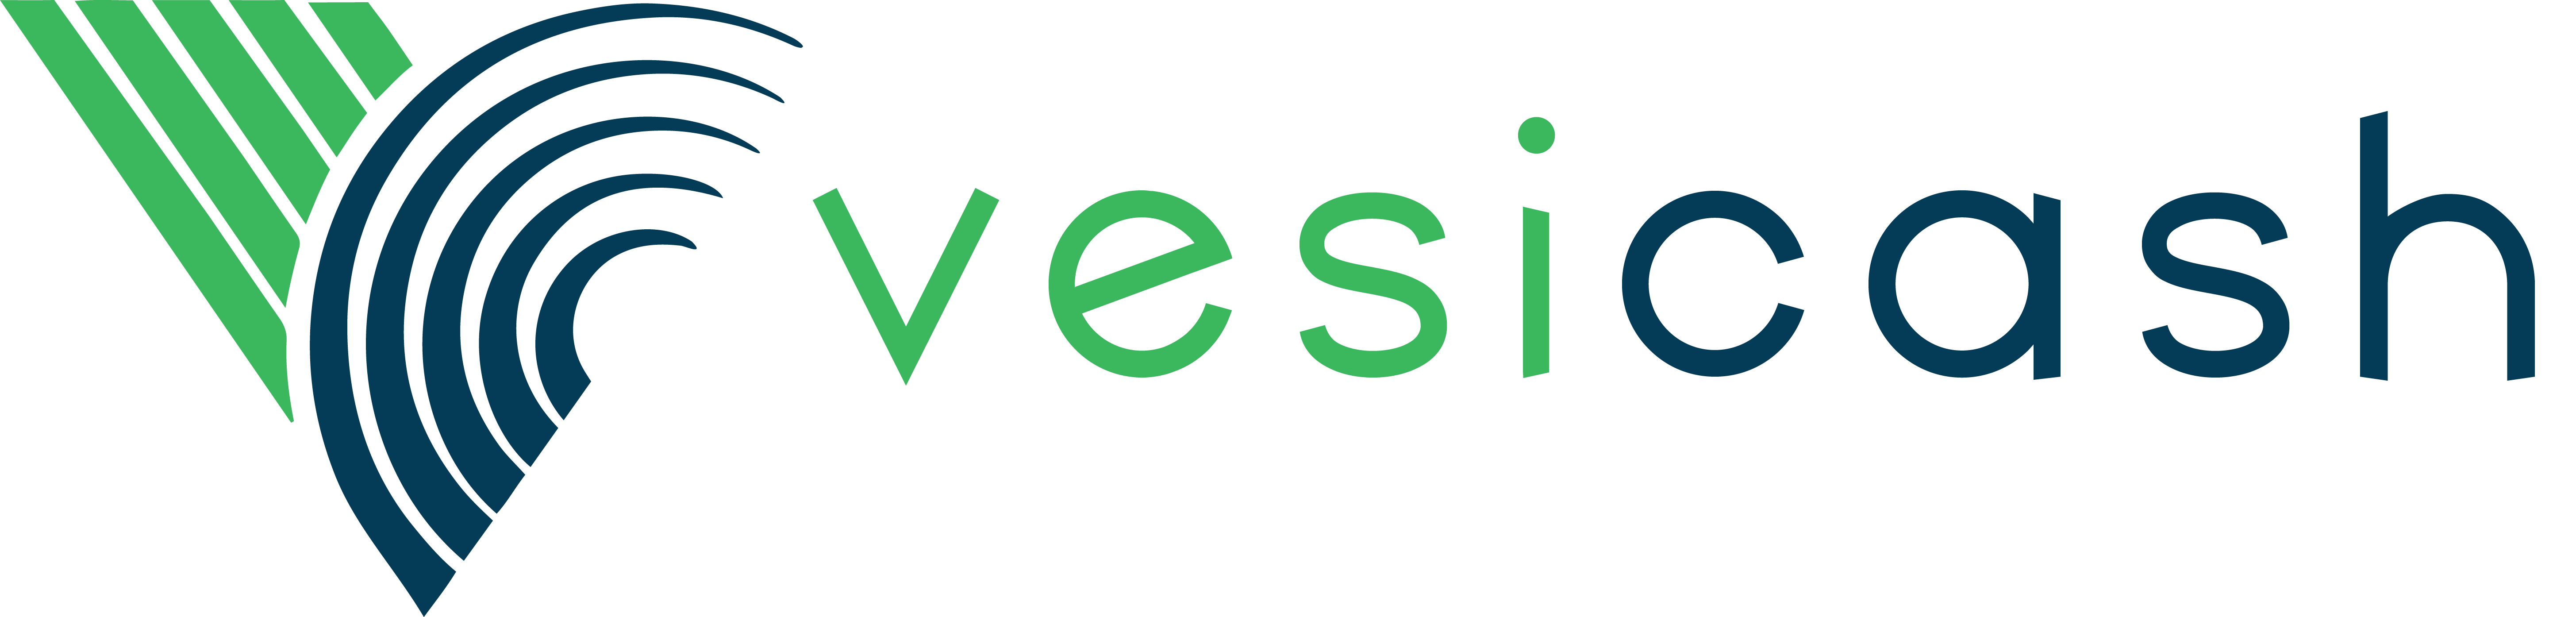 vesicash logo 1536 x 766 (1).png